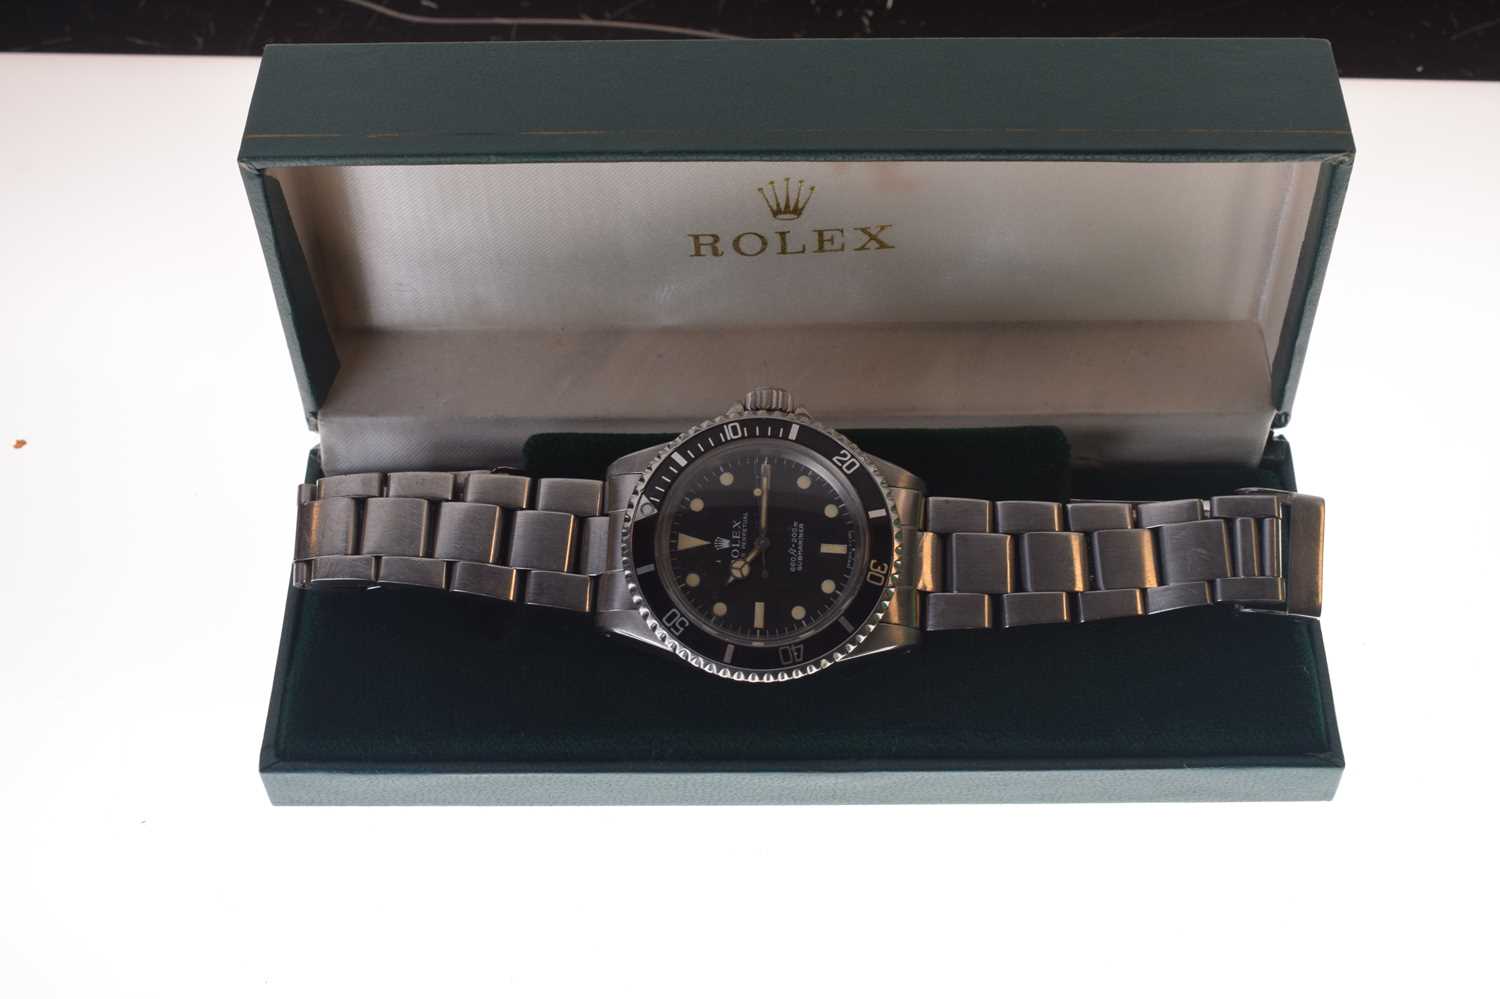 Rolex - Gentleman's Oyster Perpetual Submariner wristwatch, ref.5513 - Image 21 of 38